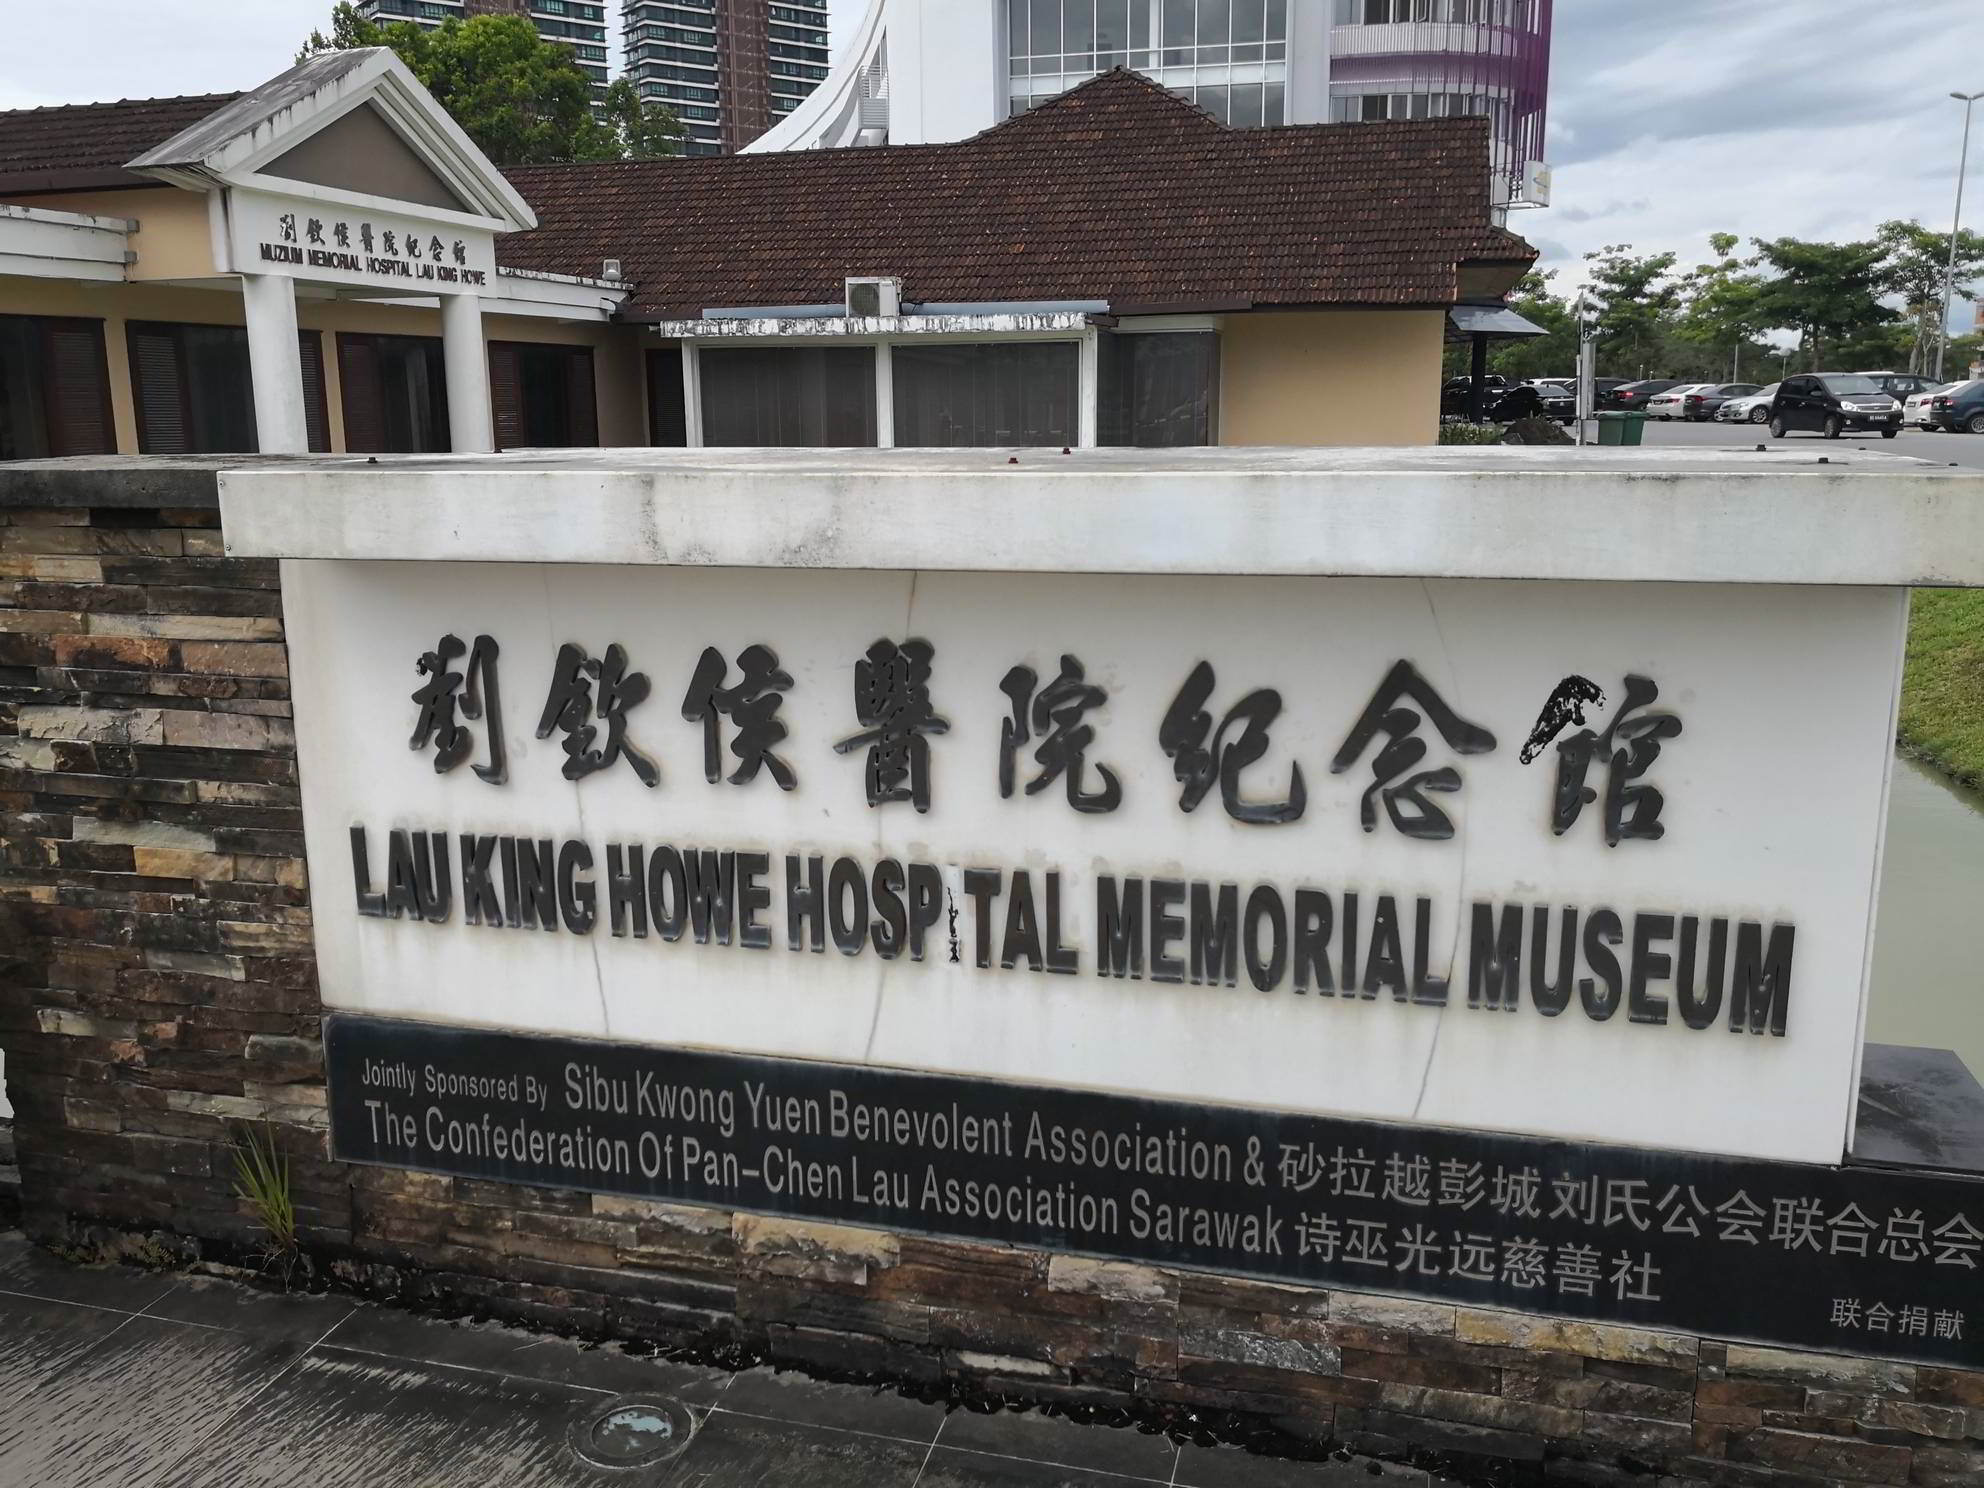 Lau King Howe Hospital Memorial Museum